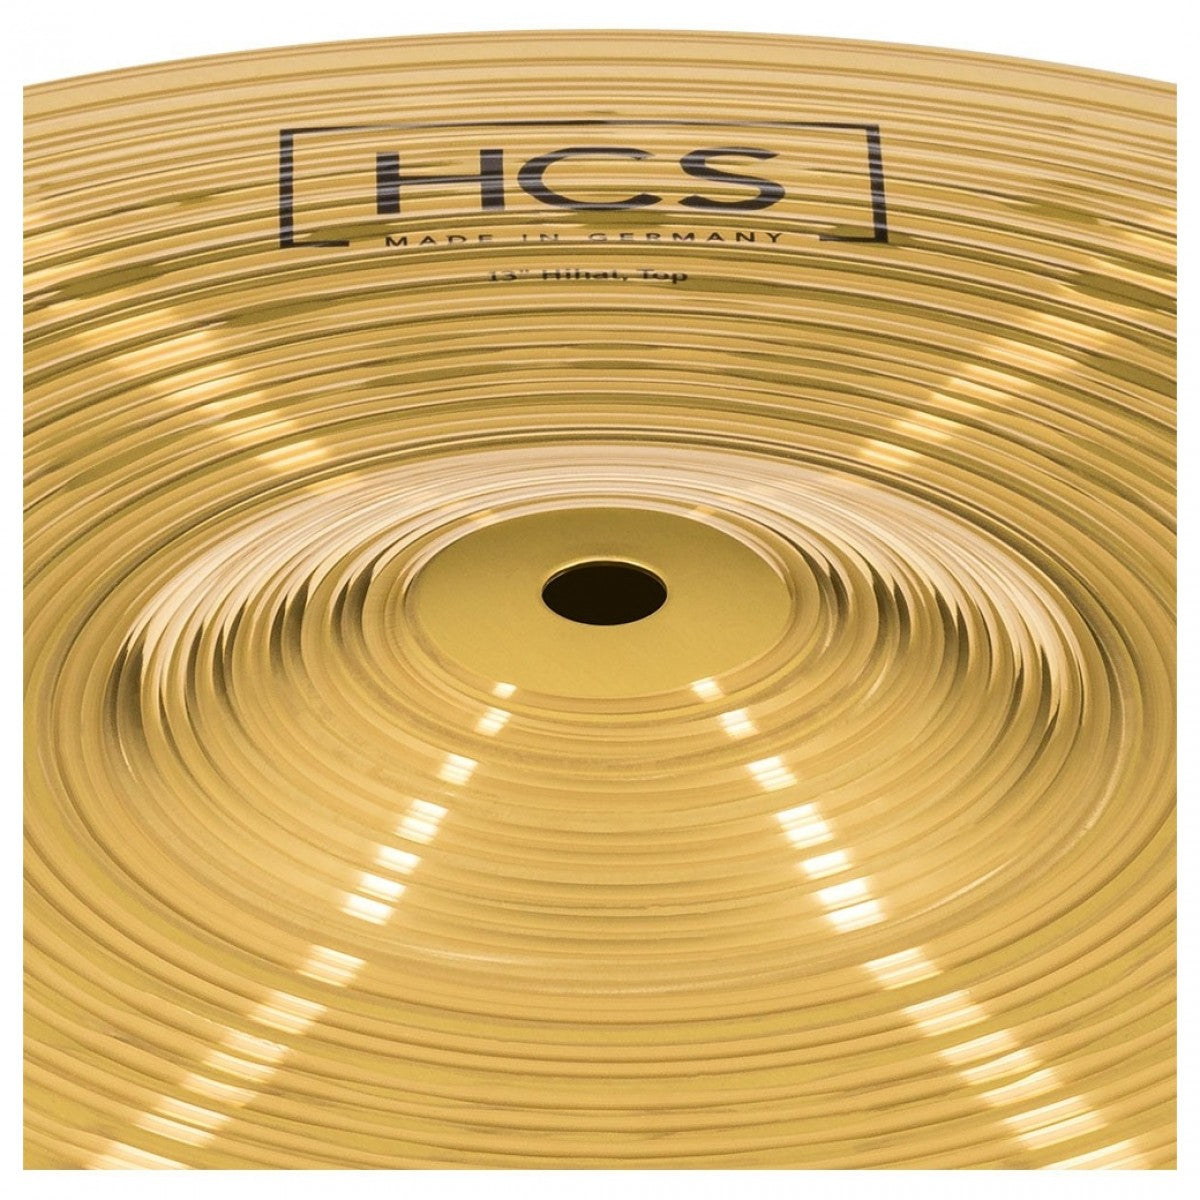 Cymbal Meinl HCS 13" HIHAT - HCS13H - Việt Music